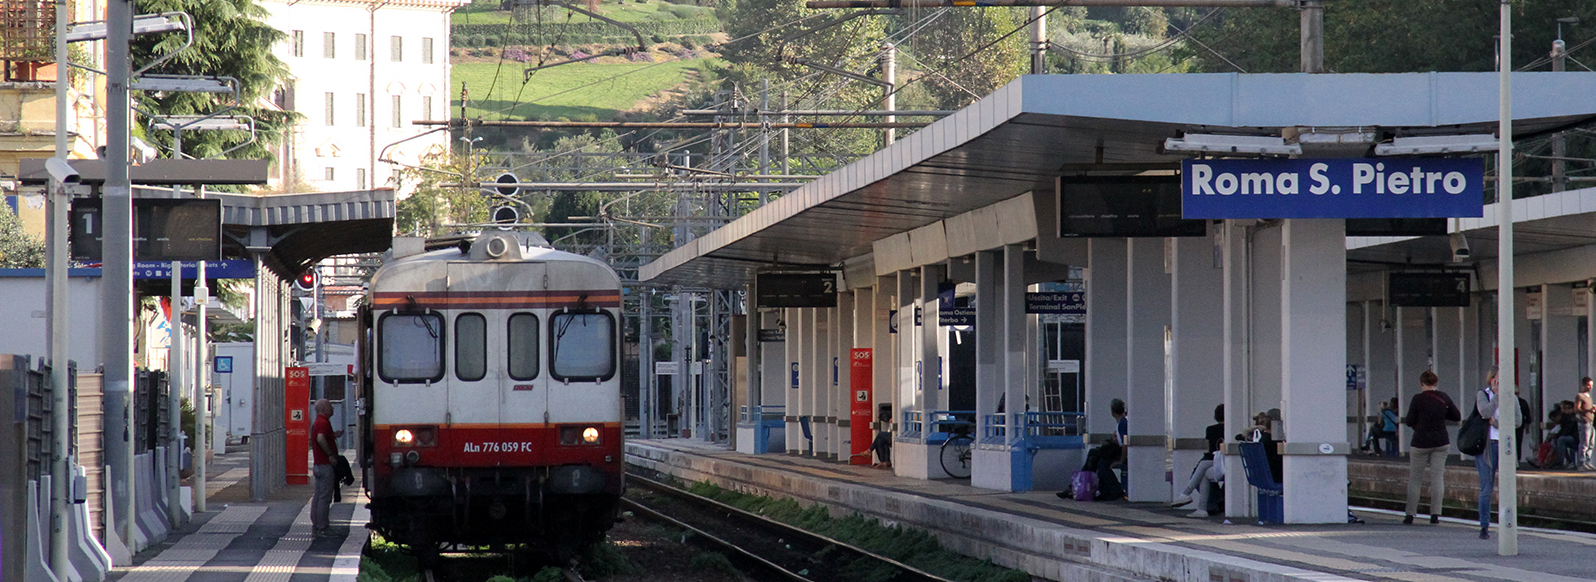 Roma_San_Pietro_train_station_FCU_ALn_776_October_2012.jpg